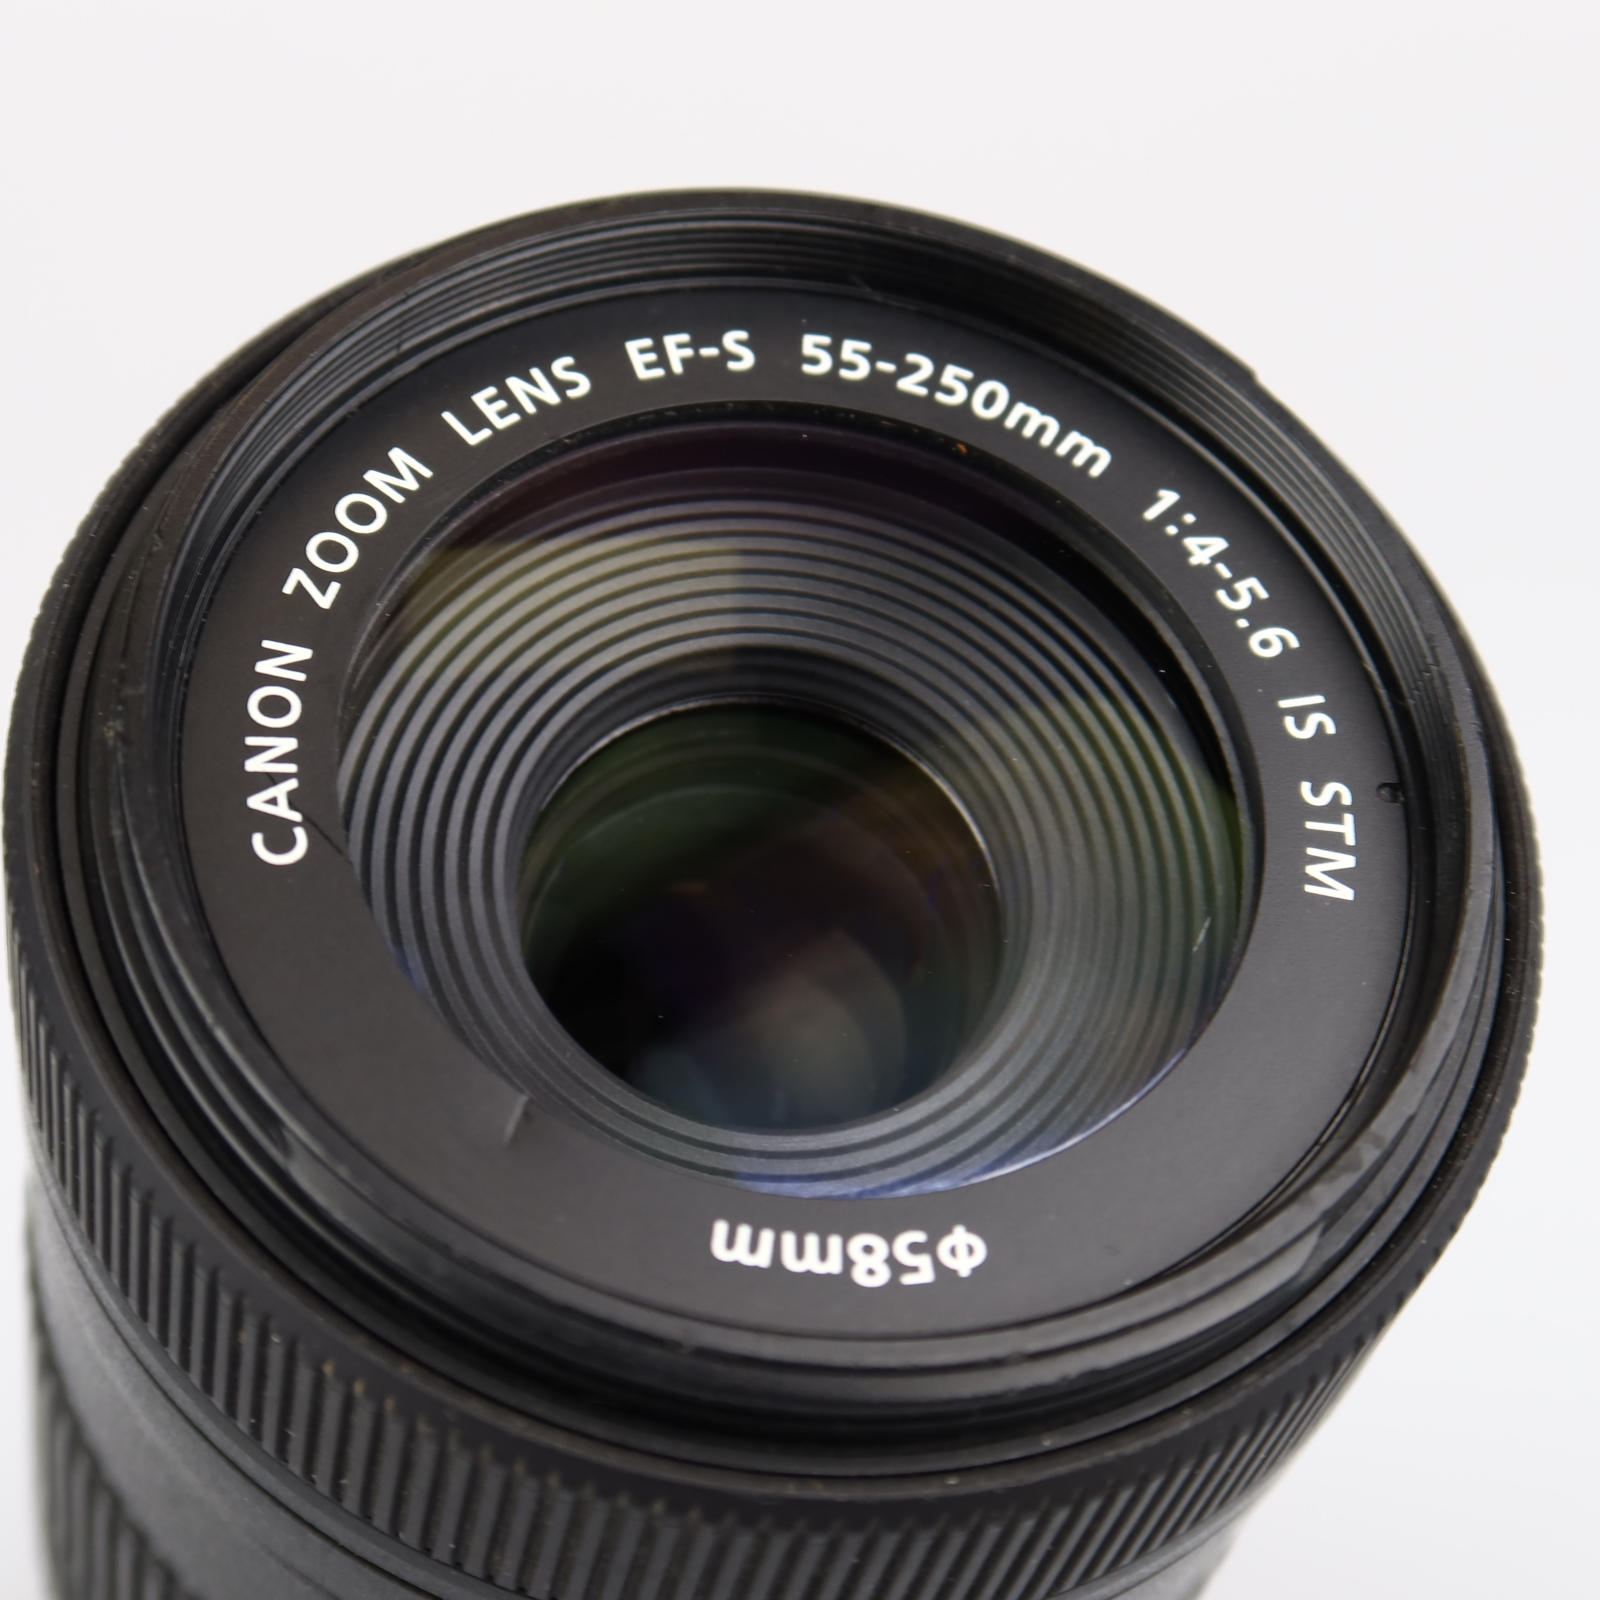 (Myyty) Canon EF-S 55-250mm f/4-5.6 IS STM zoom-objektiivi (käytetty)